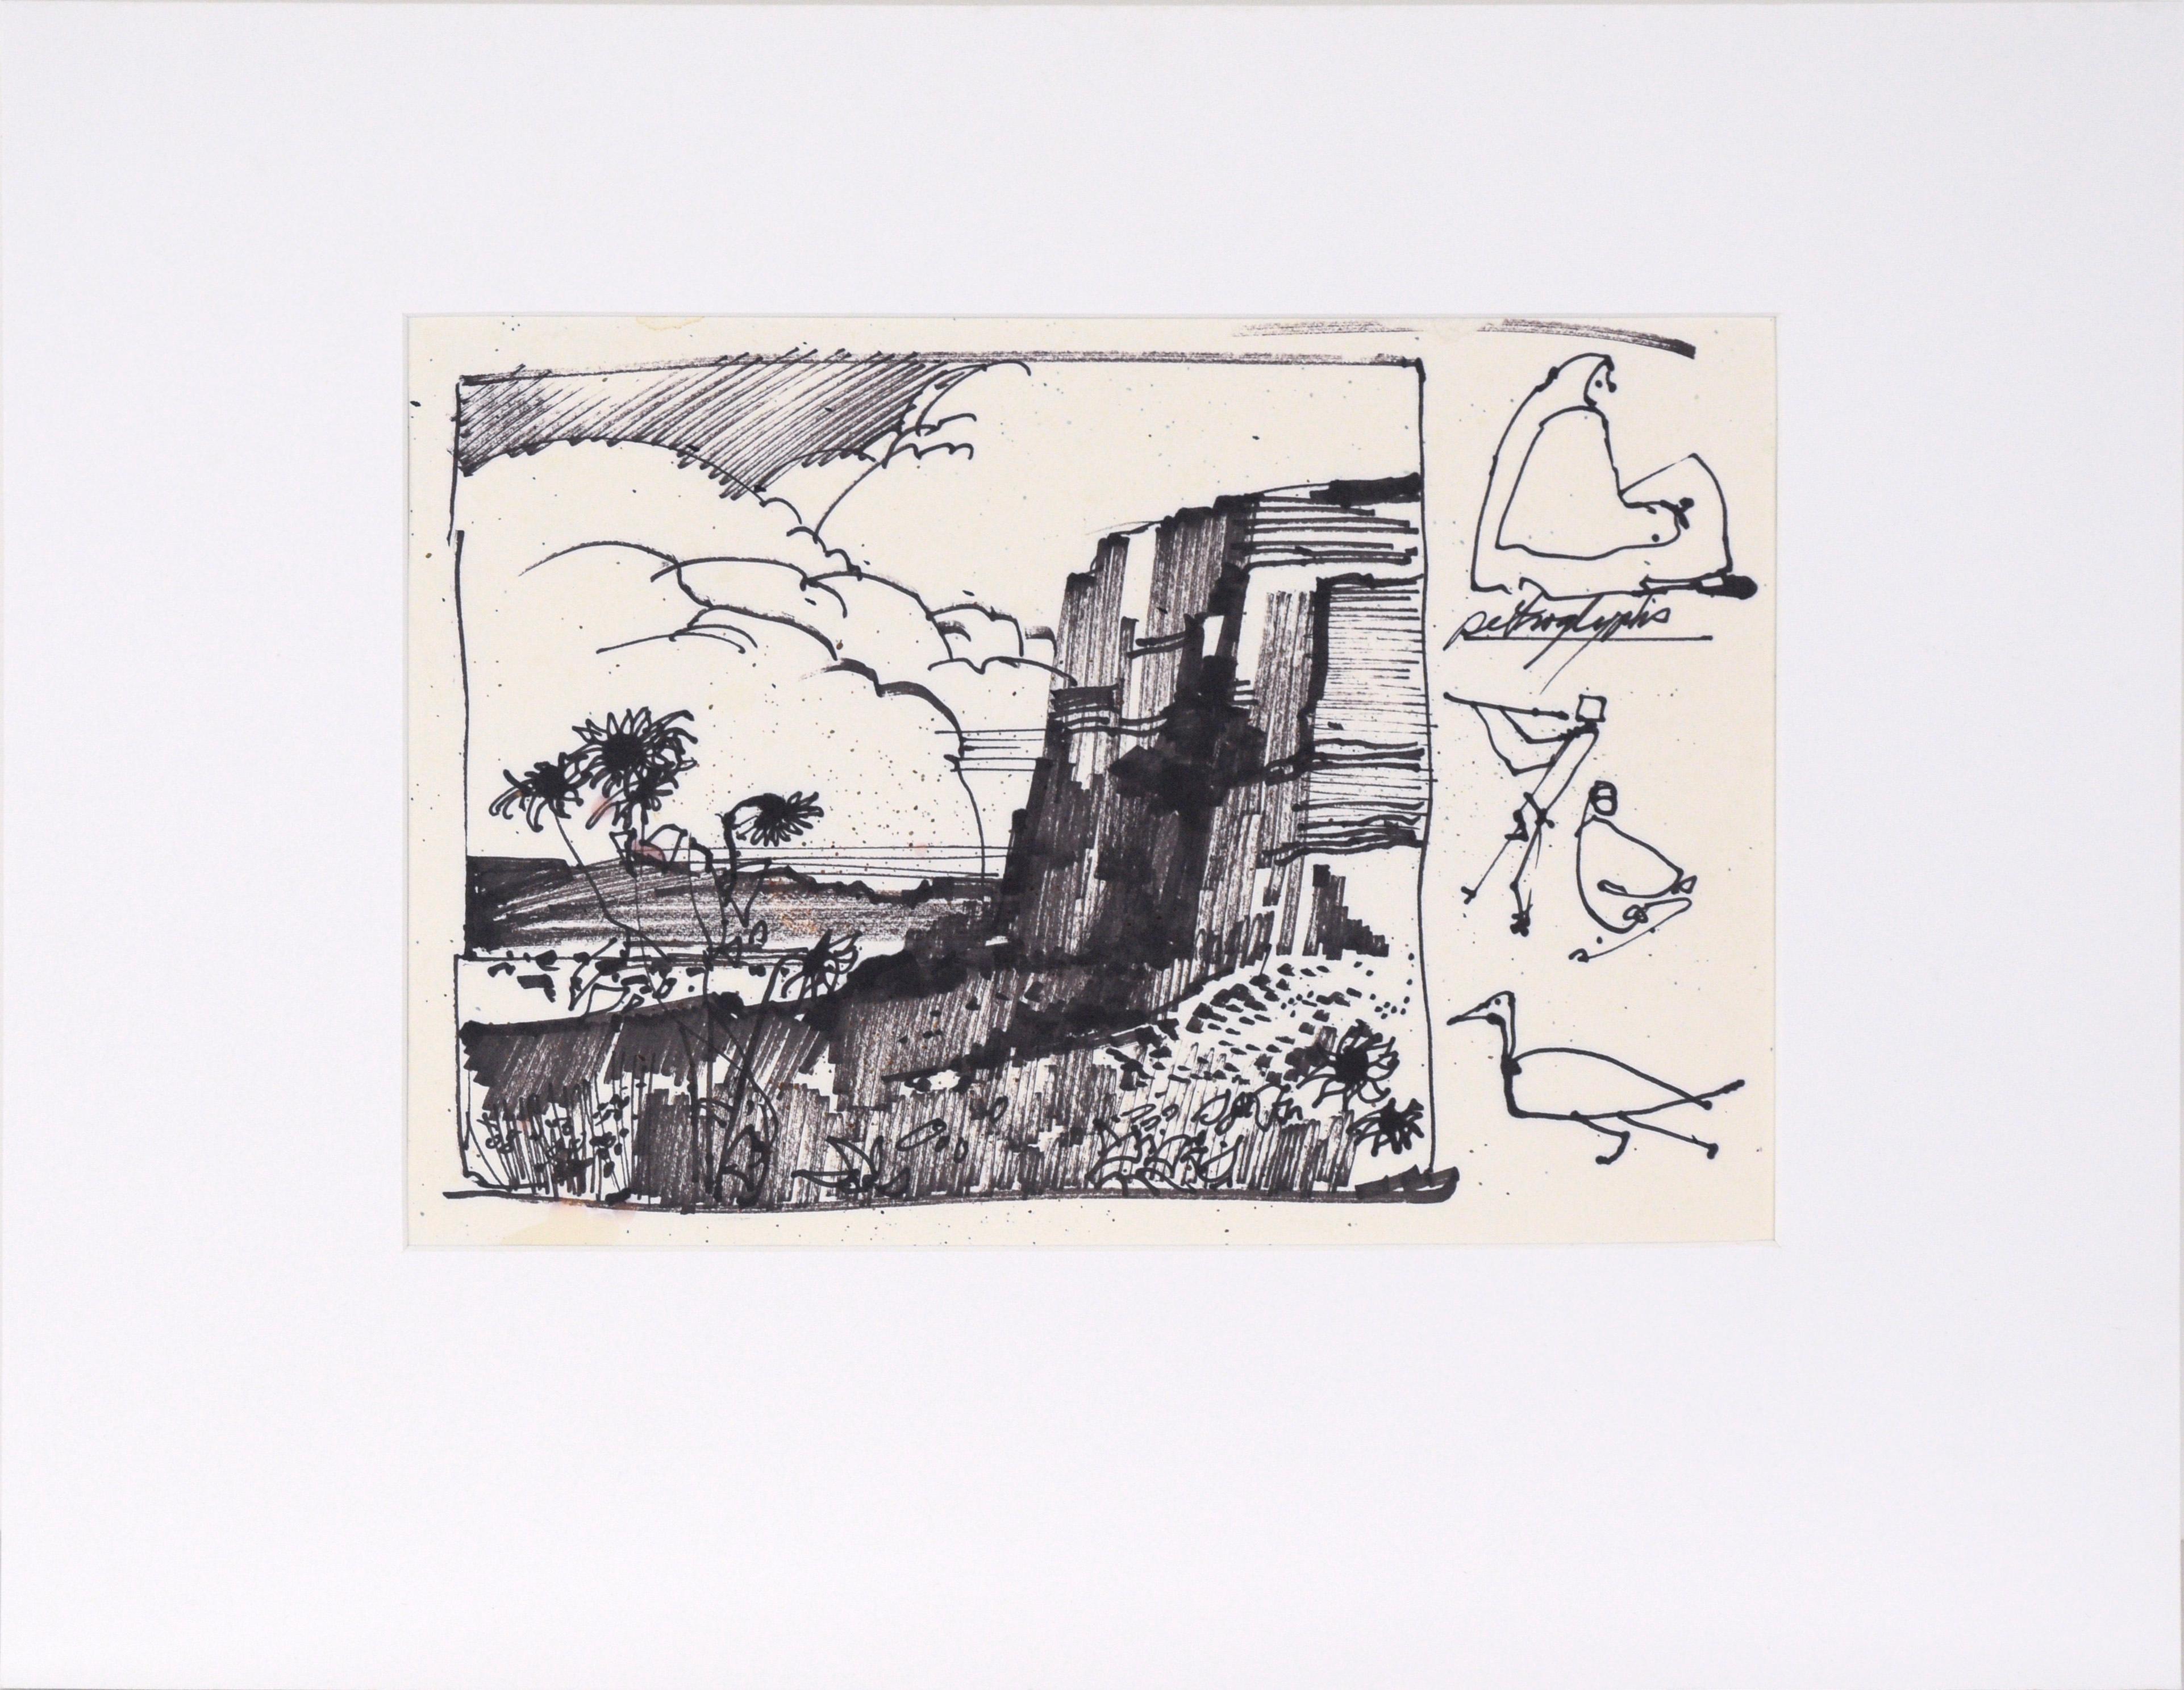 Desert Sunflowers & Petroglyphs - Line Drawing Landscape in Ink on Paper